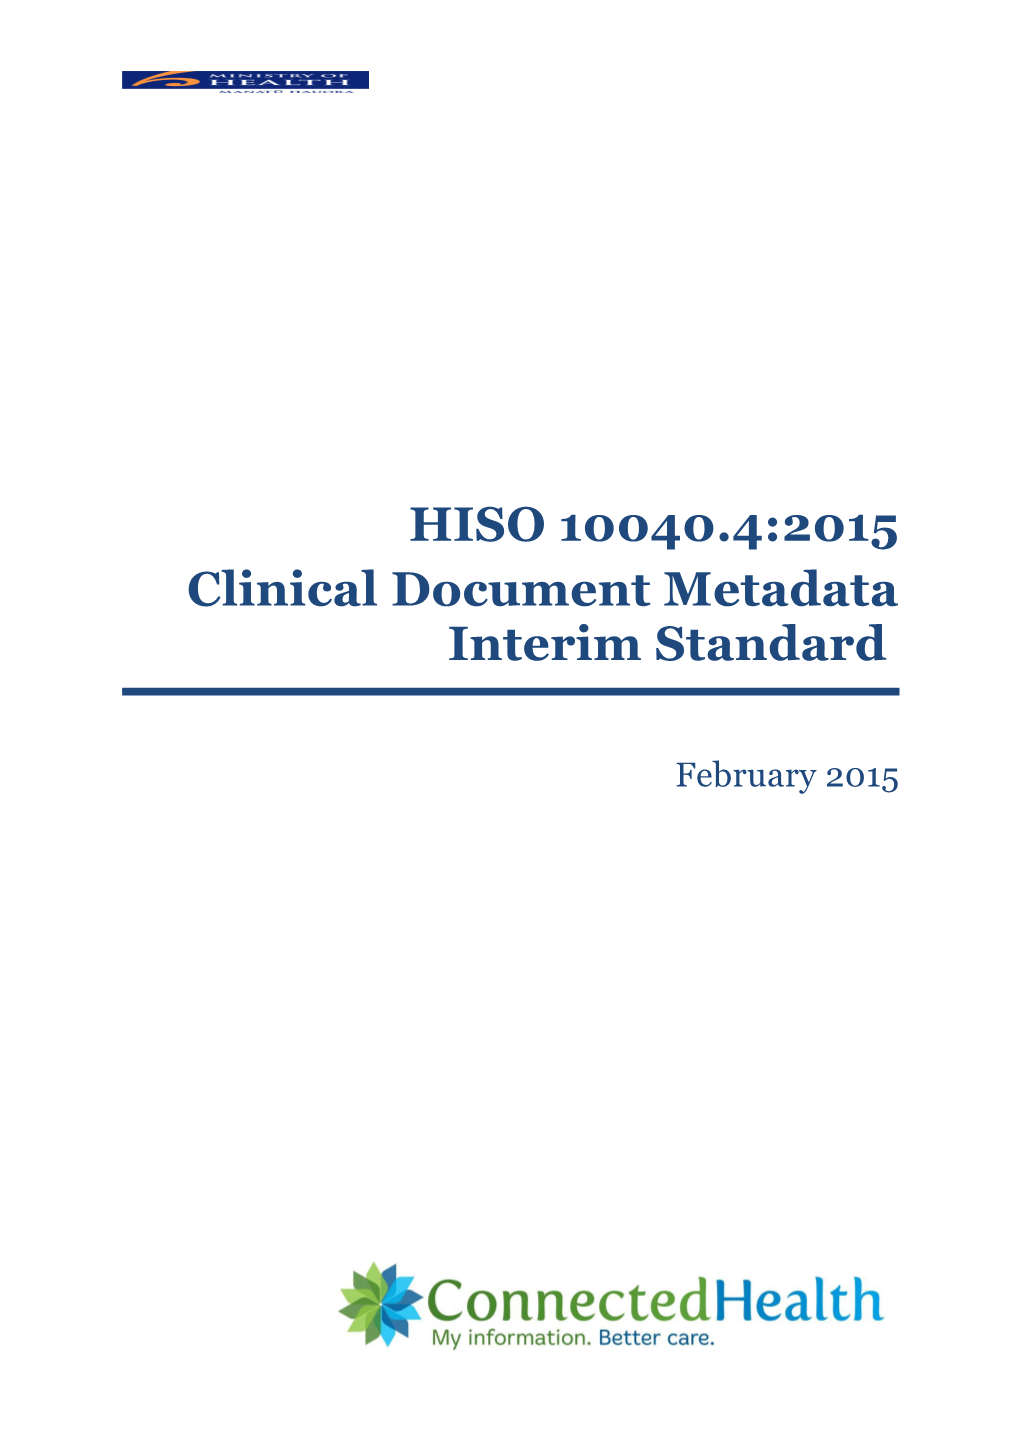 HISO 10040.4:2015 Clinical Document Metadata Standard